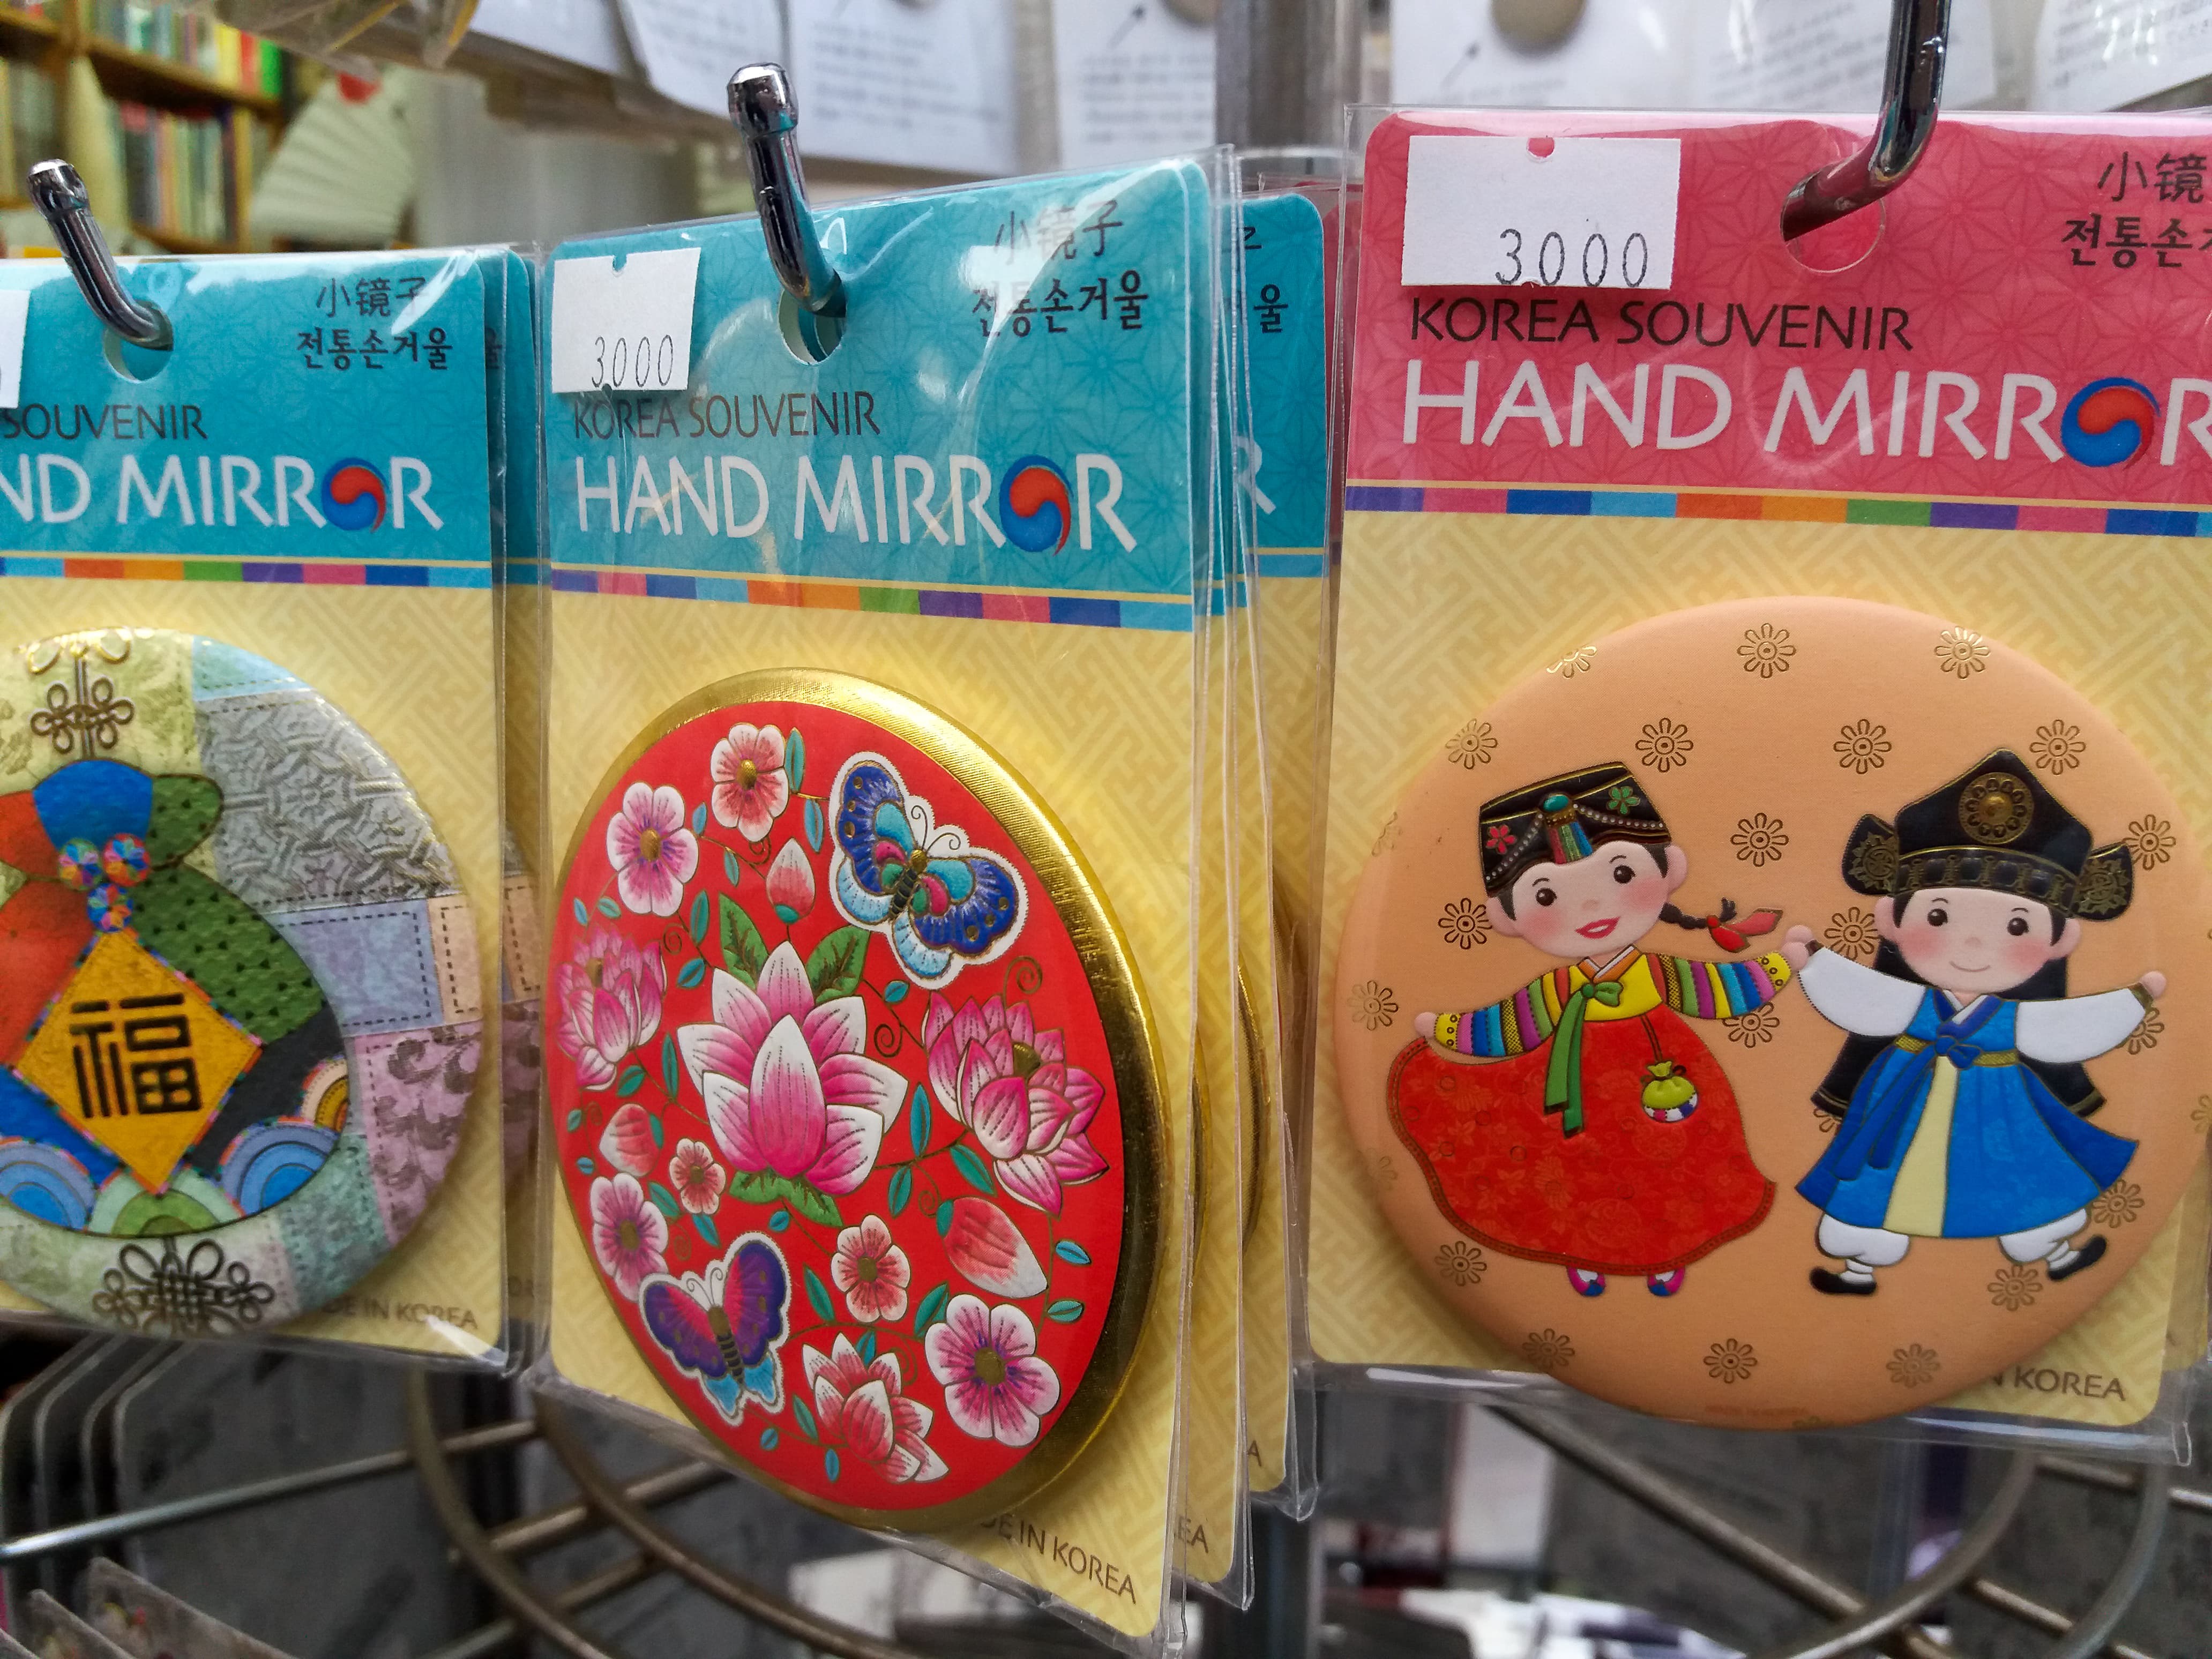 Korean hand mirrors